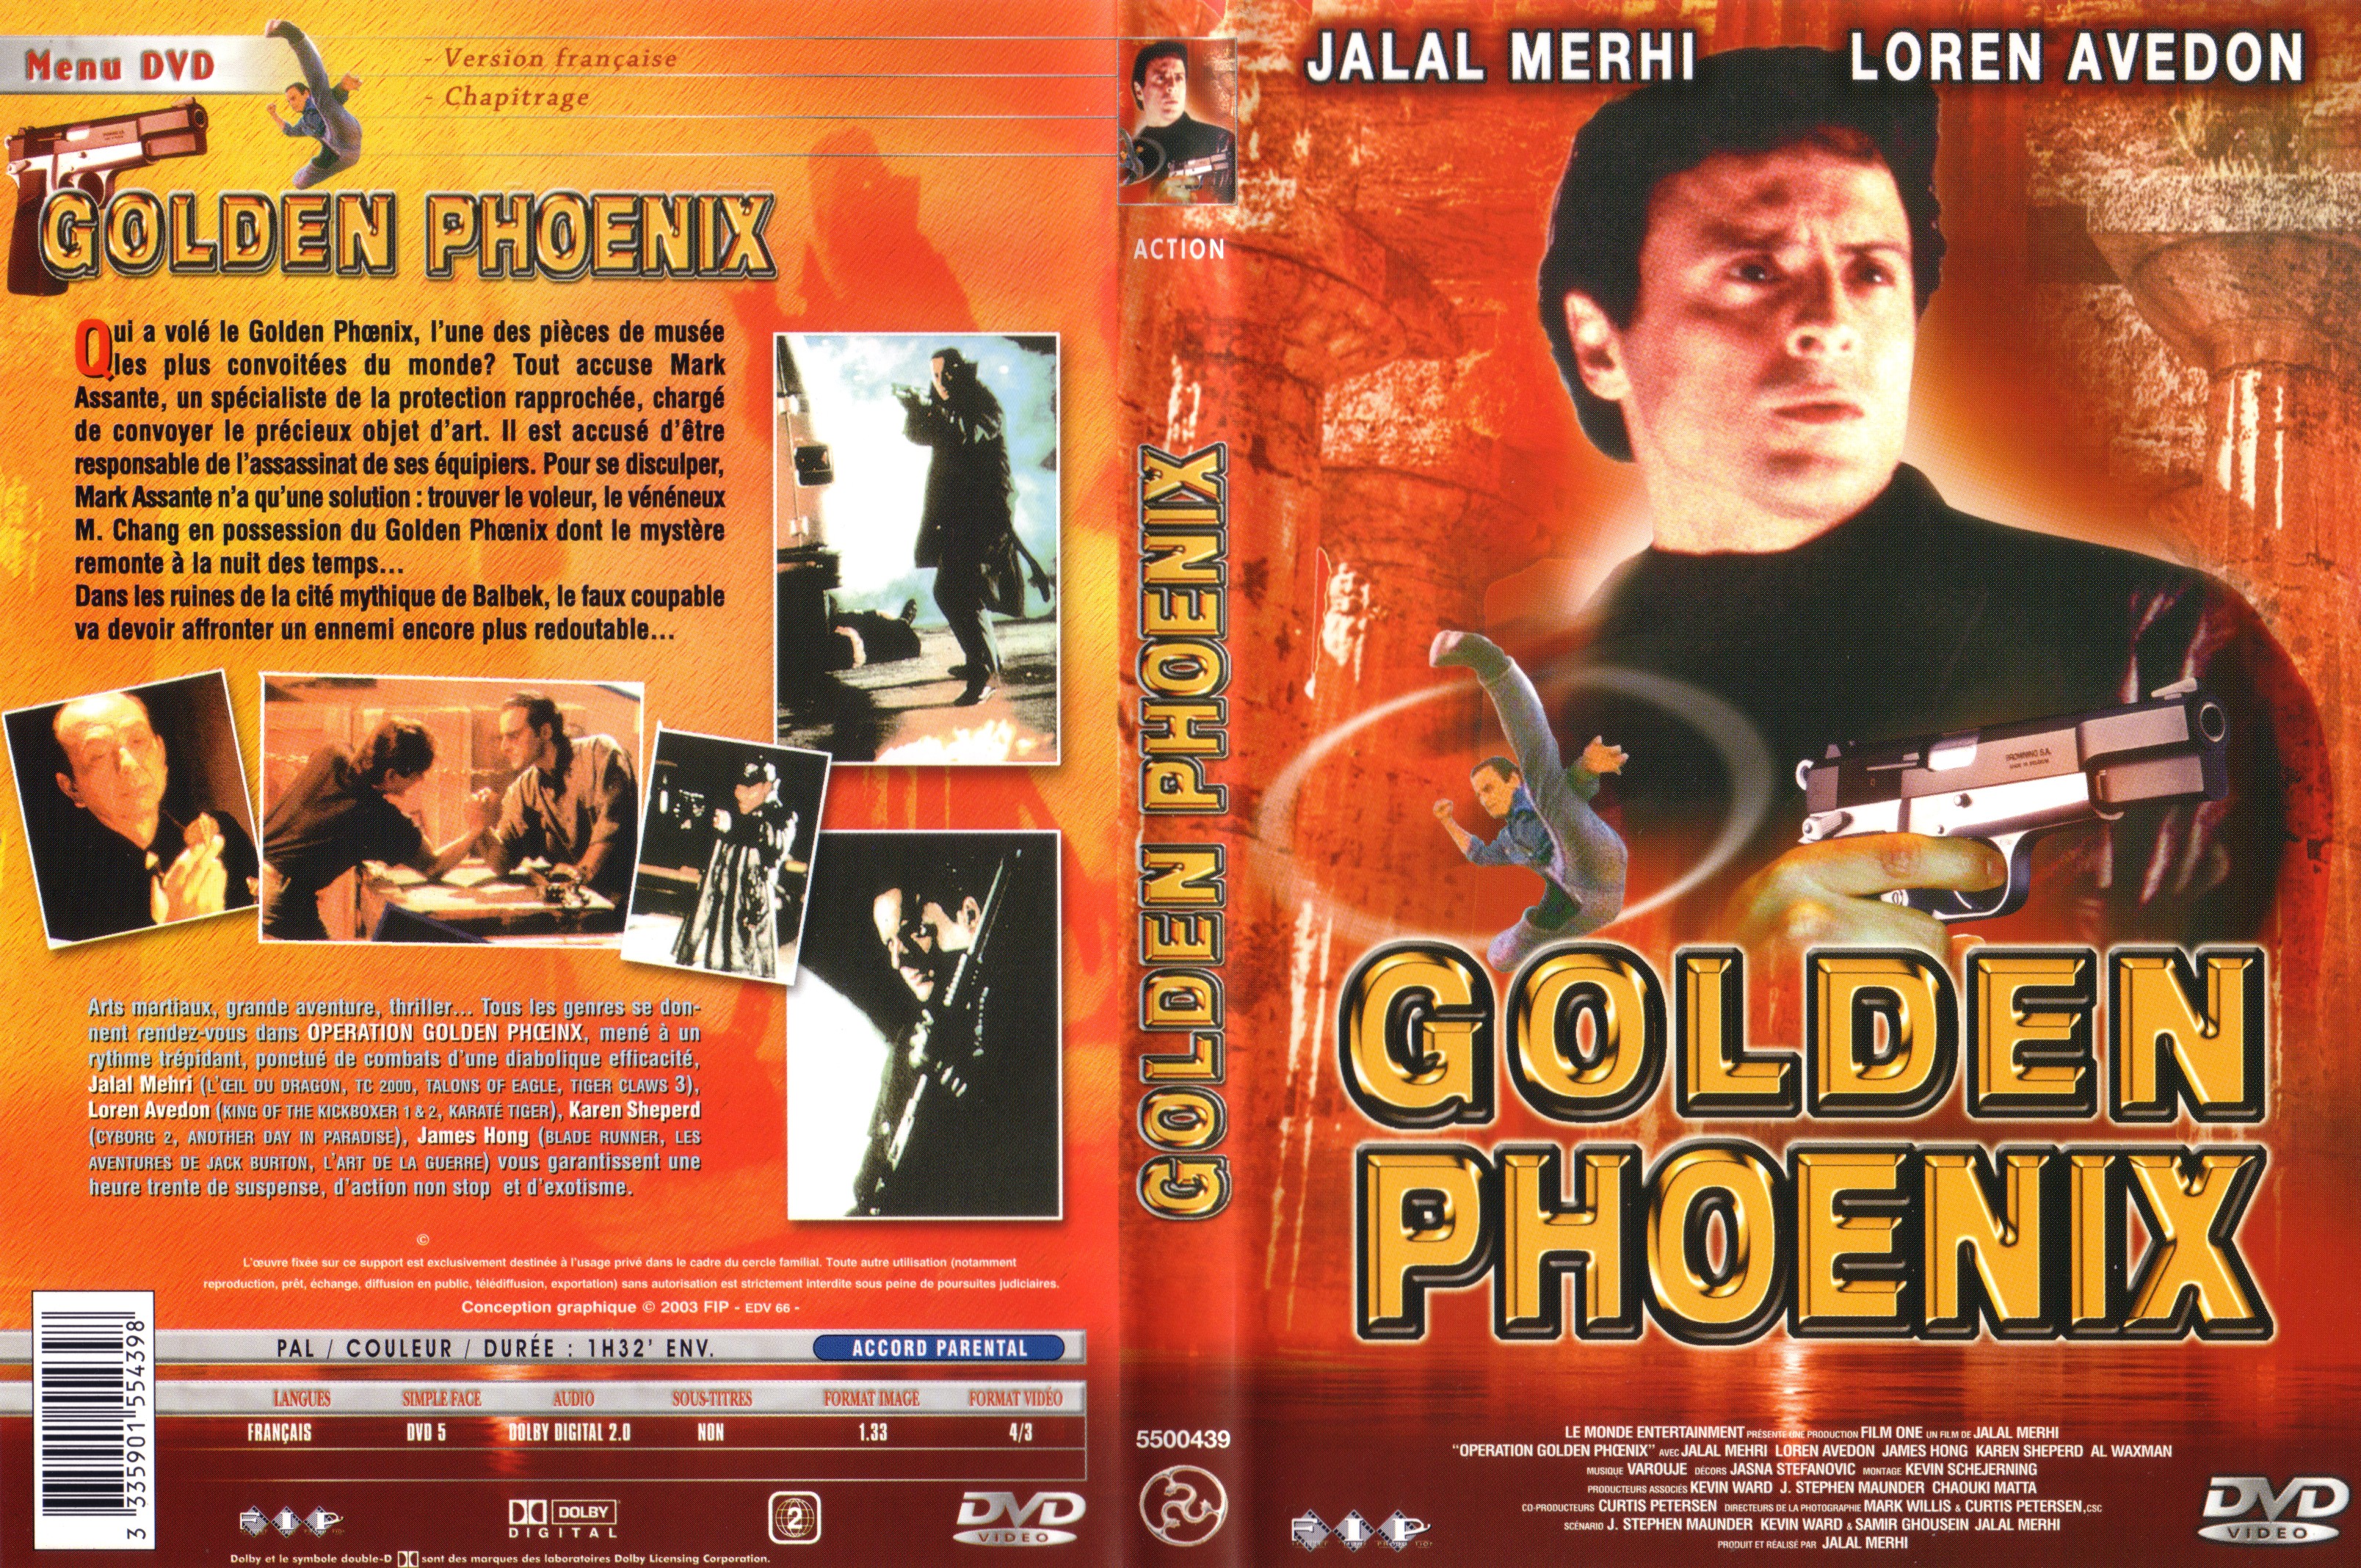 Jaquette DVD Golden phoenix